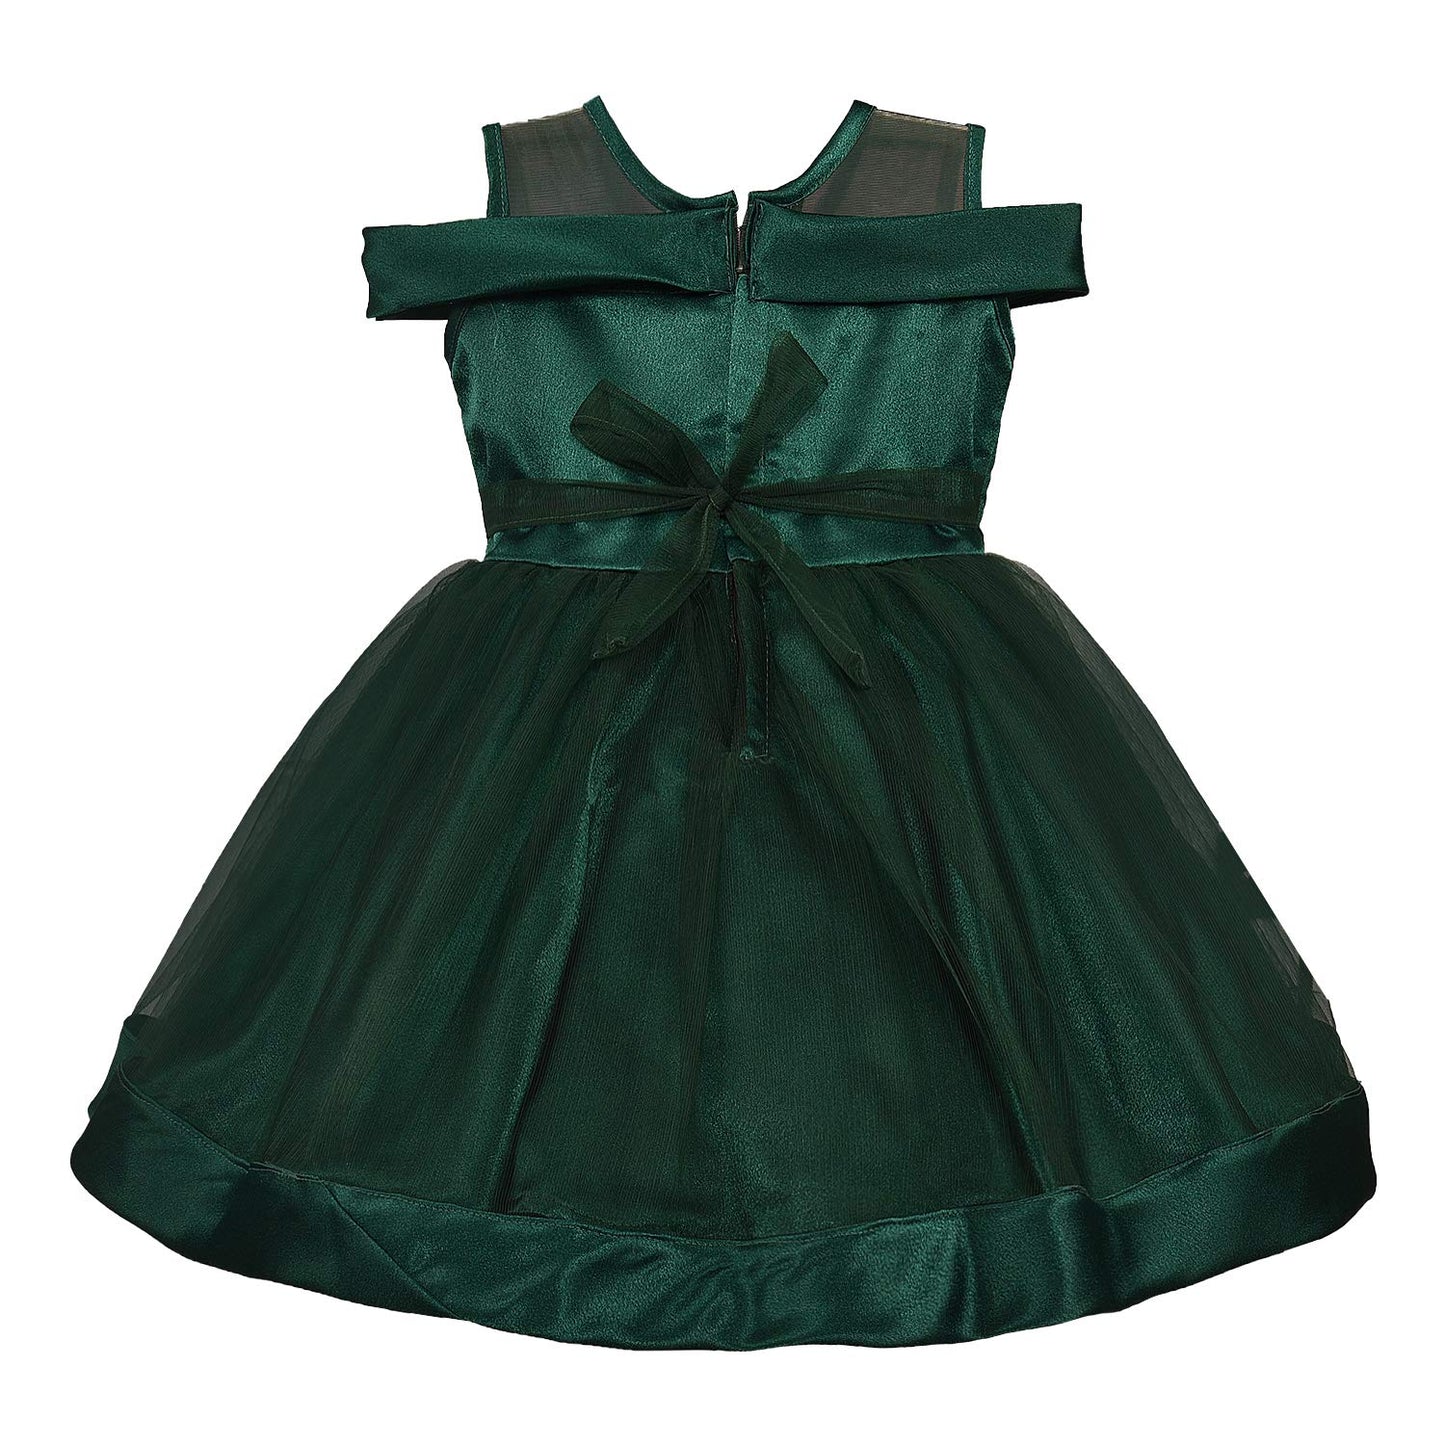 Green Embroidered Birthday Dress for Girls - Satin - (bxa232grn)